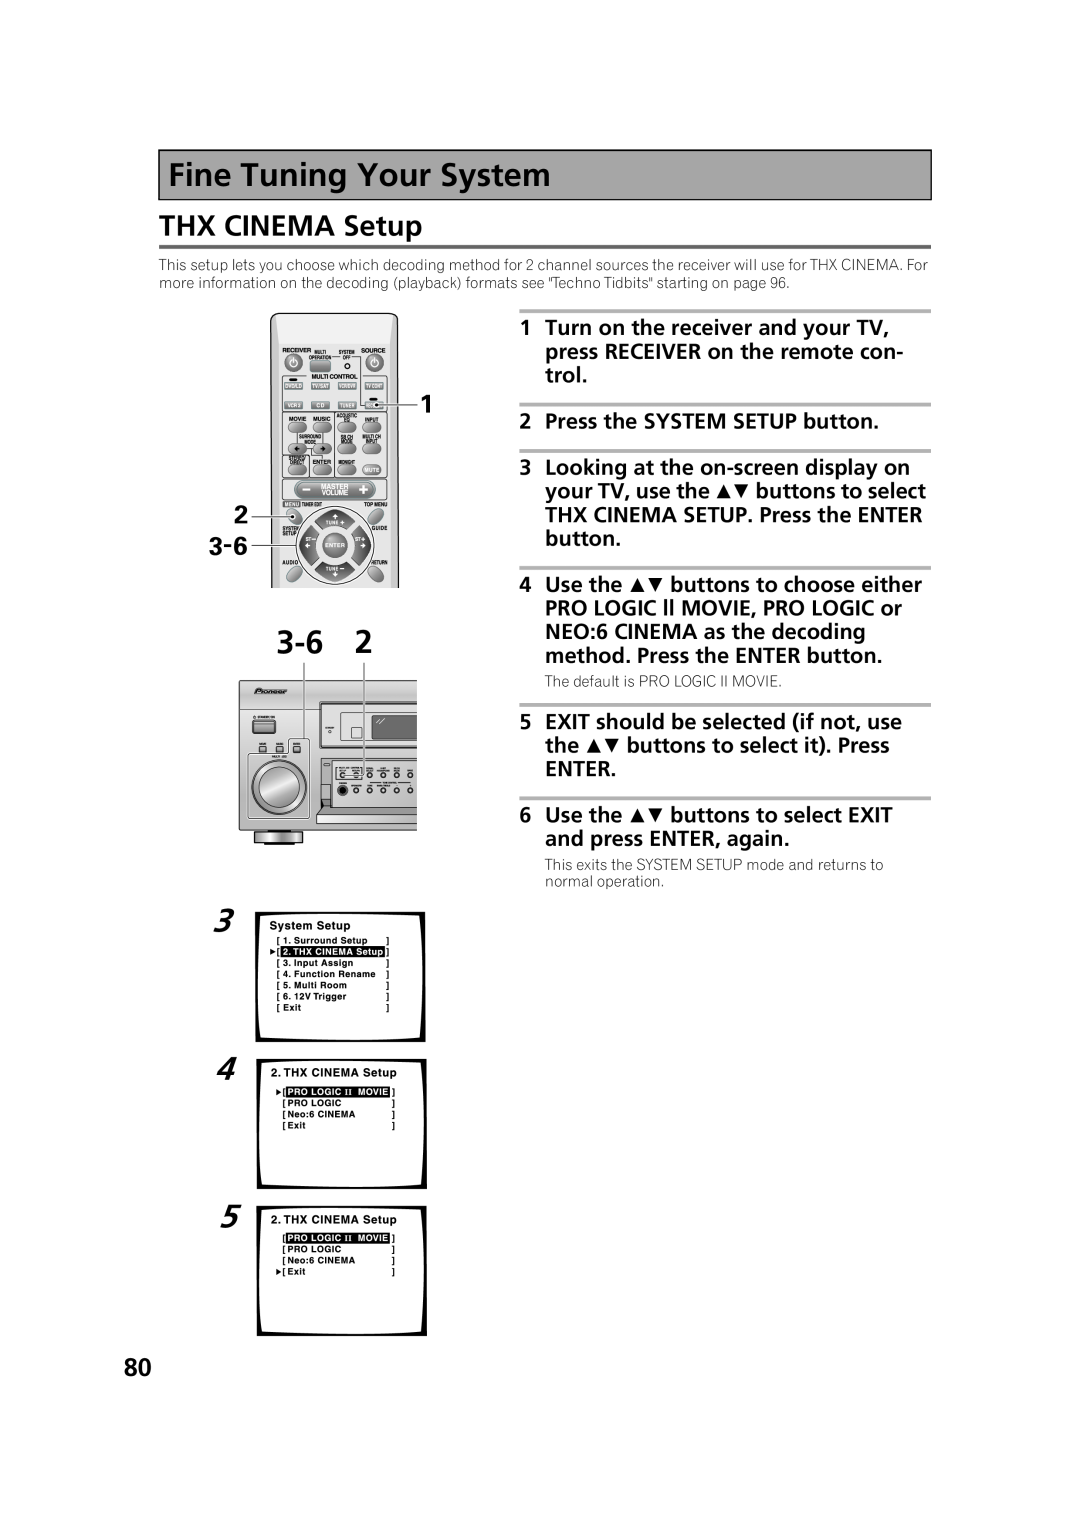 Pioneer VSX-53TX manual 3 4, THX CINEMA Setup 